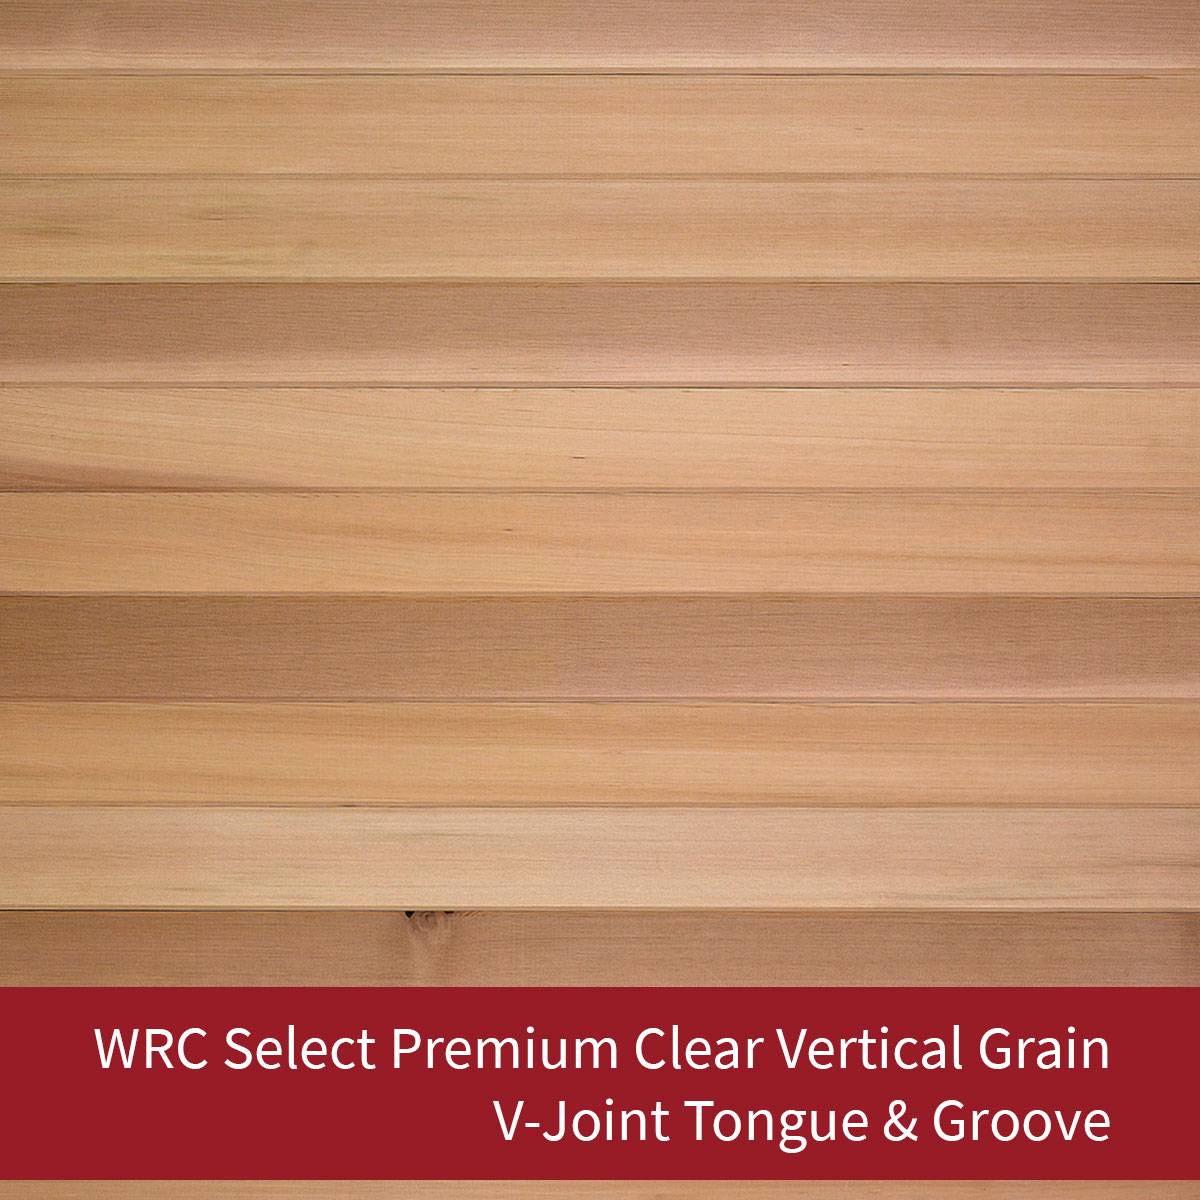 Western Red Cedar Select Premium Clear Vertical Grain Cladding